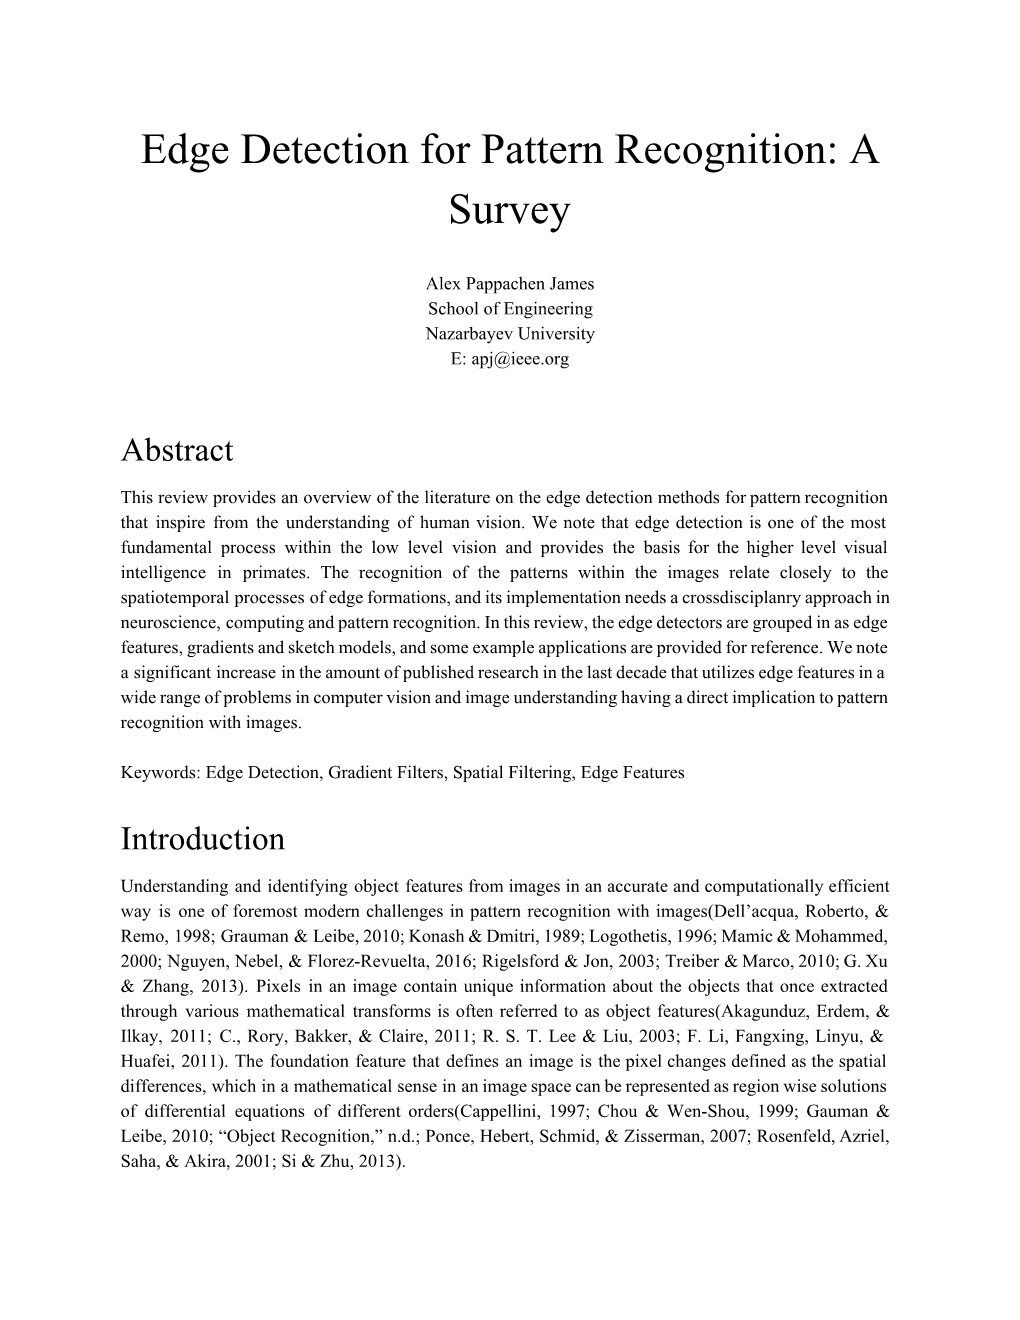 Edge Detection for Pattern Recognition: a Survey